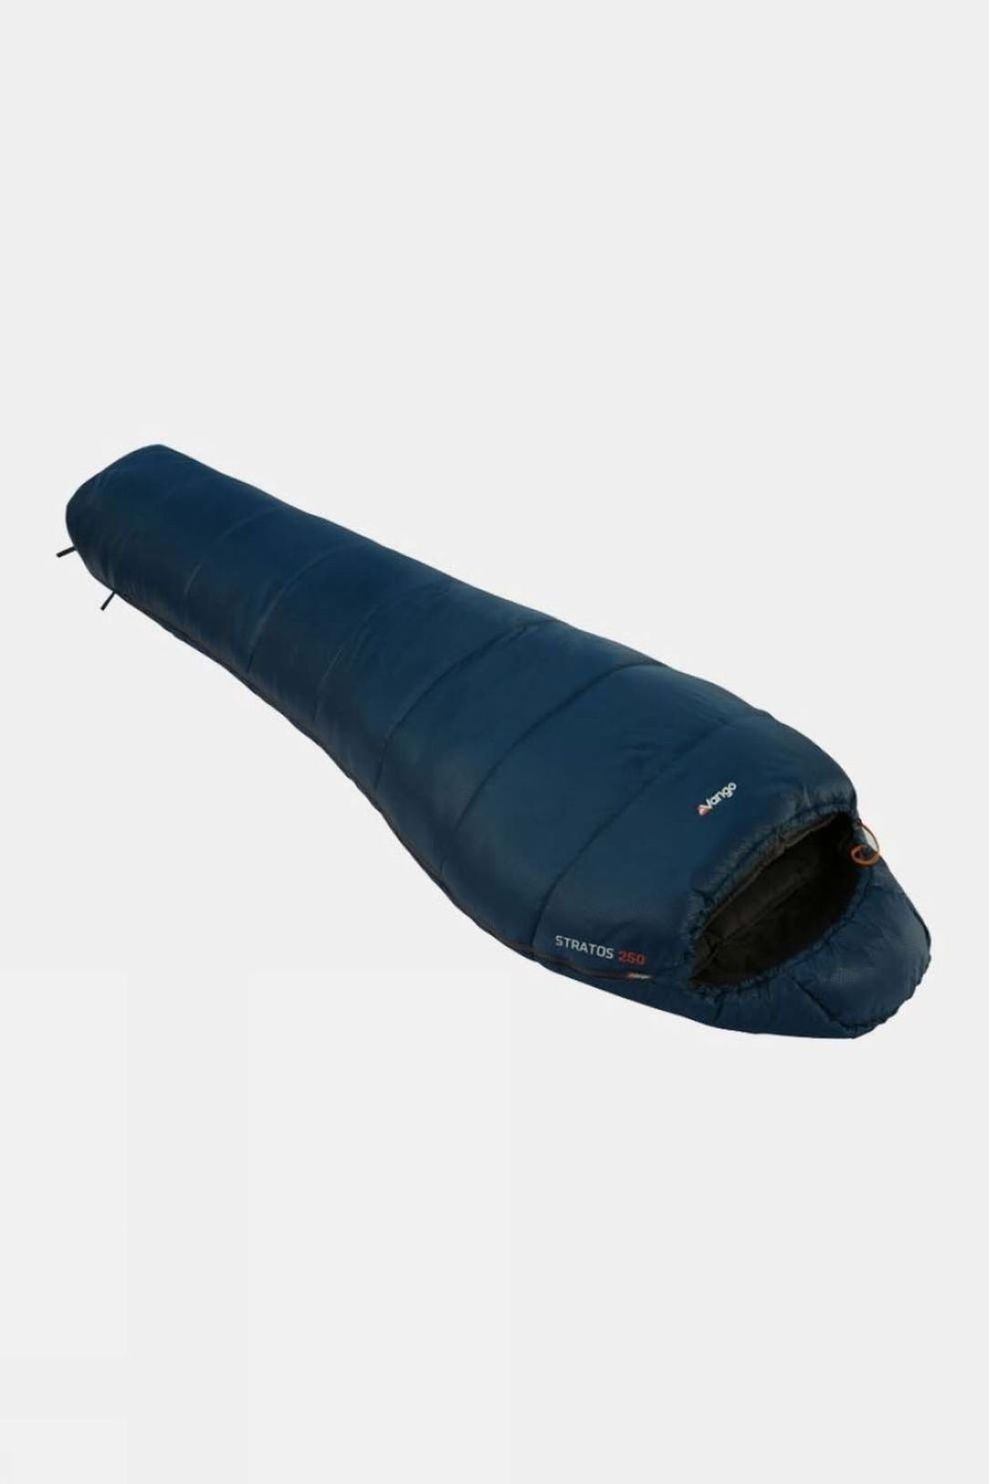 Vango Stratos Alpha 250 Sleeping Bag